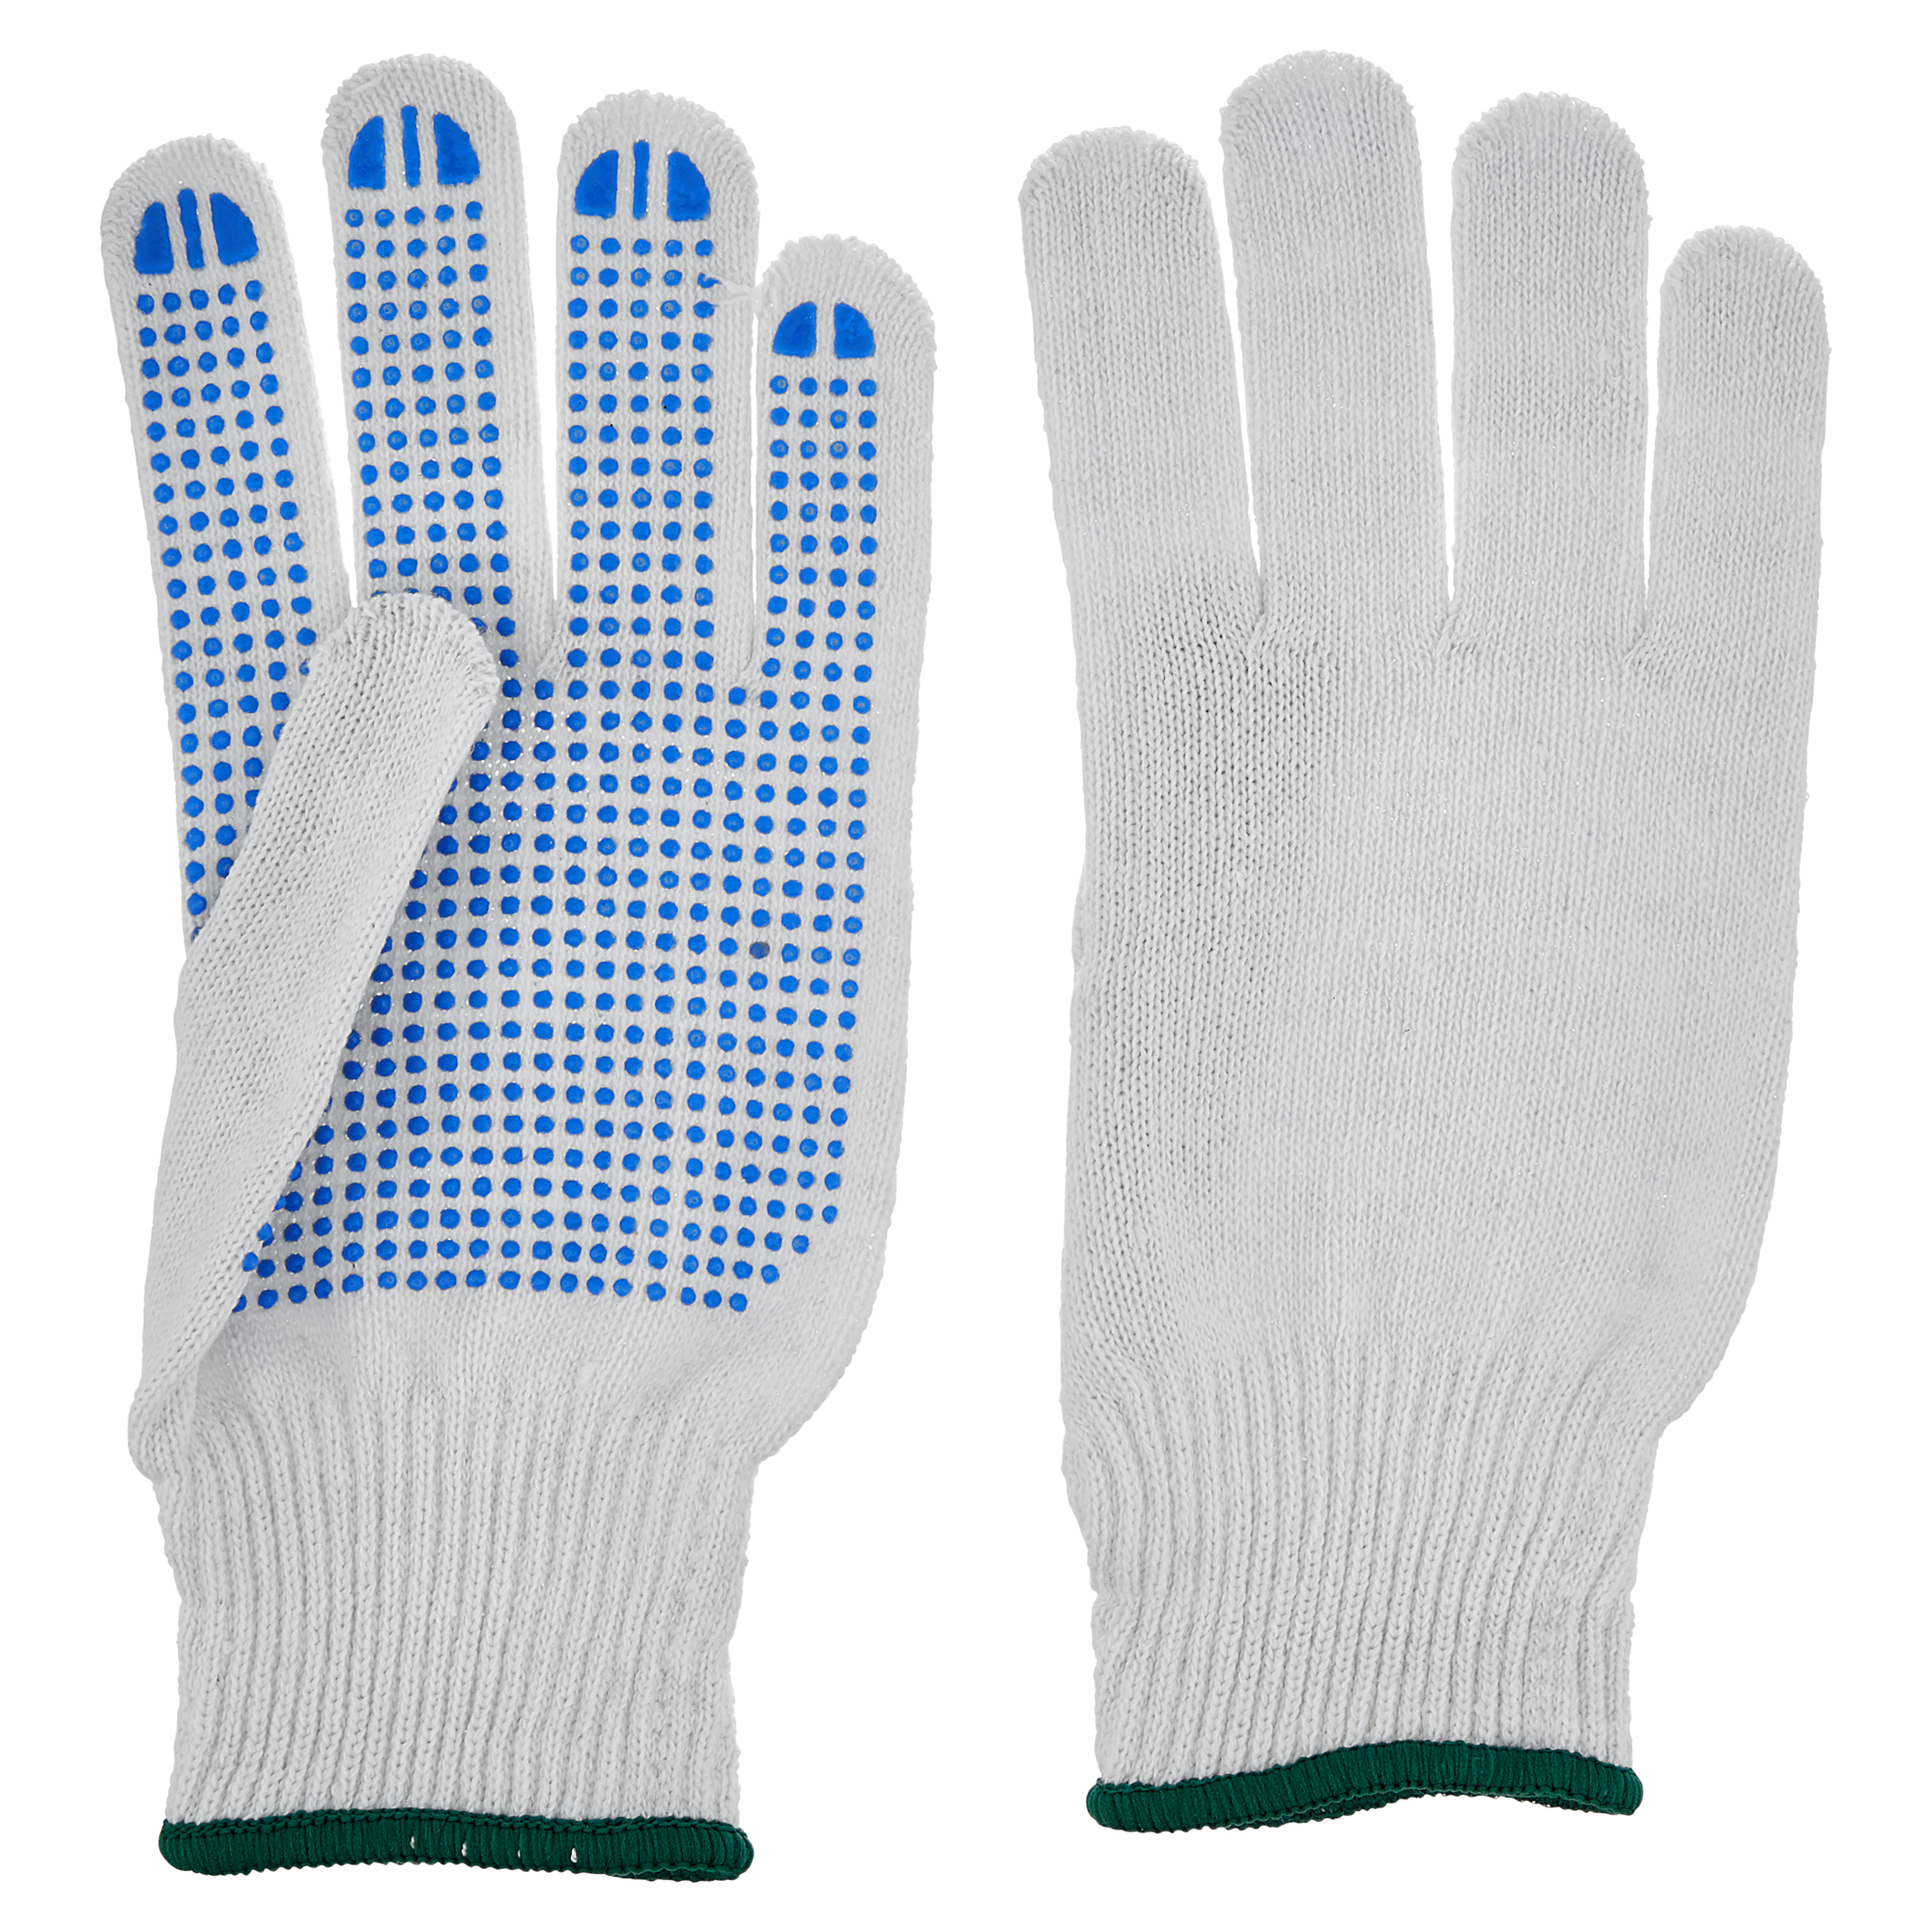 Universal Handschuhe mit Grip weiß Gr. 9/L 10 Paar + product picture